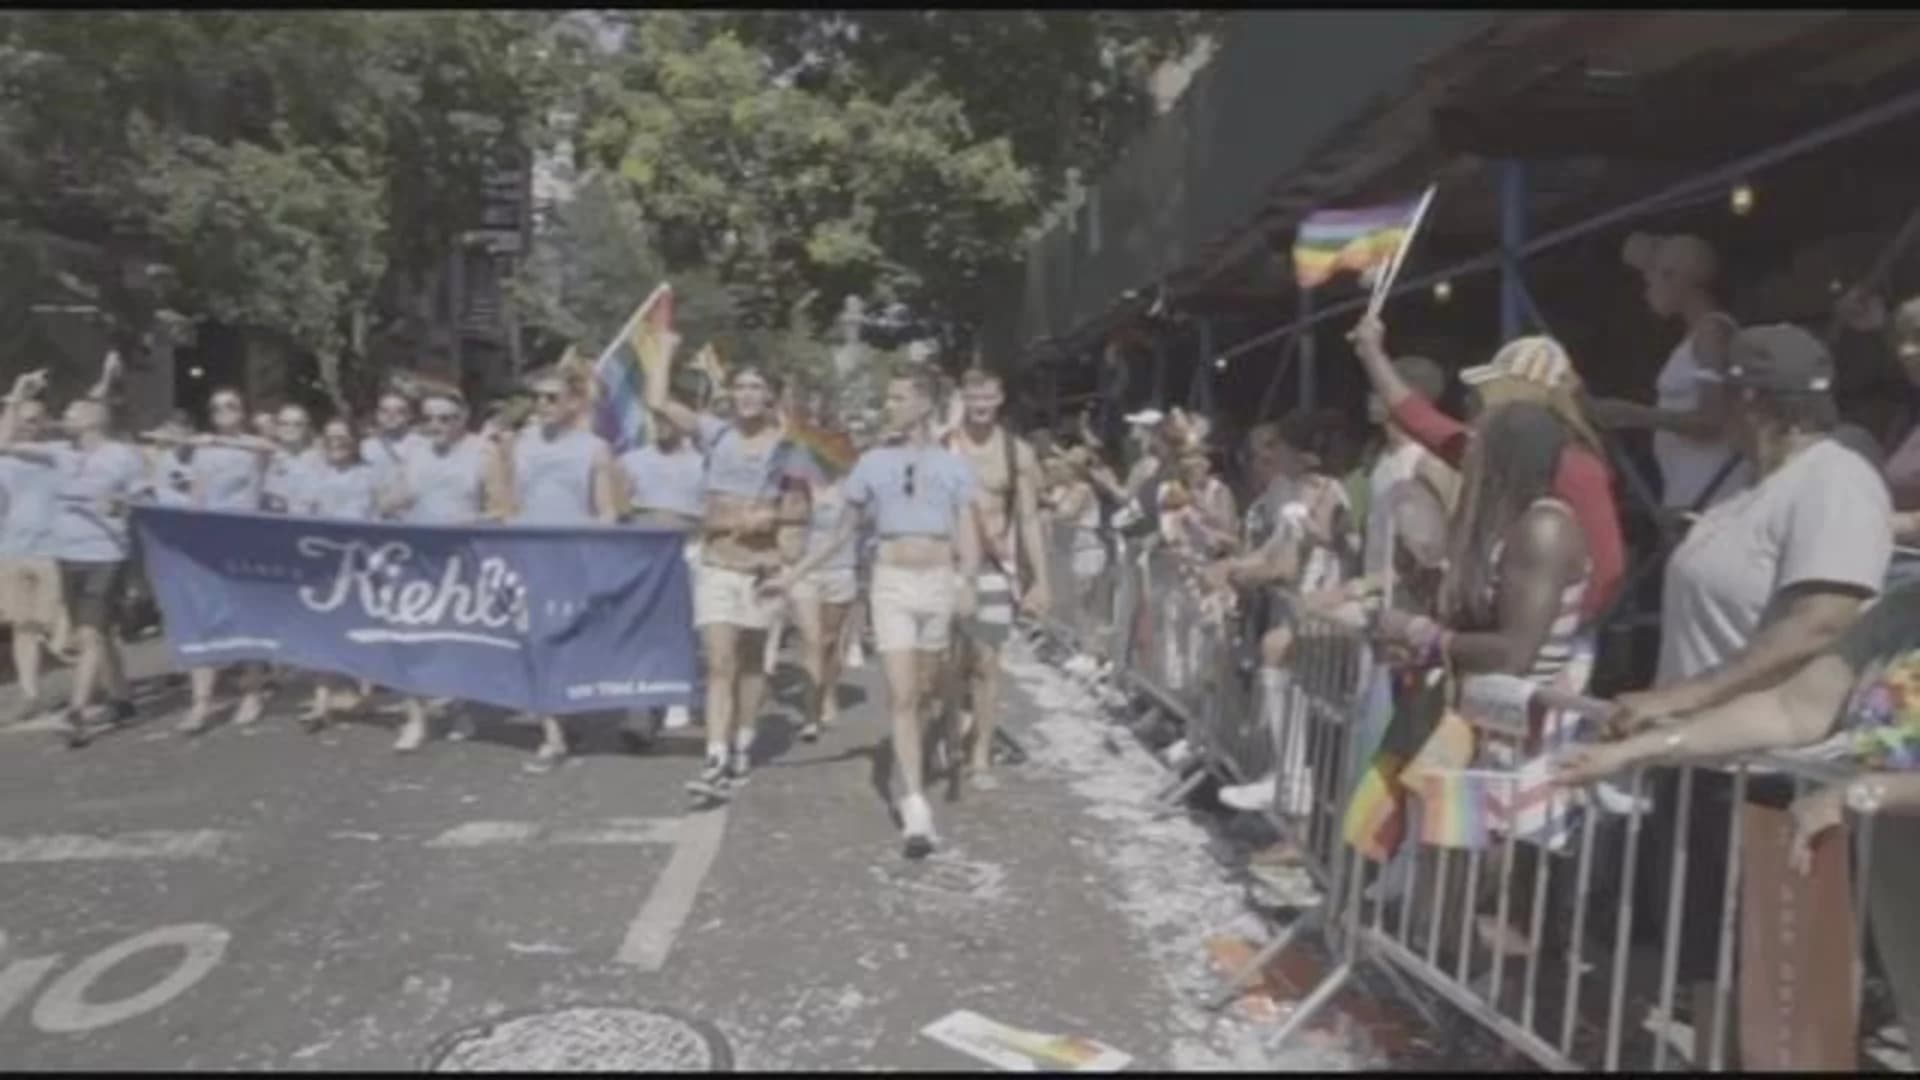 Celebration, defiance on display at New York City pride parade